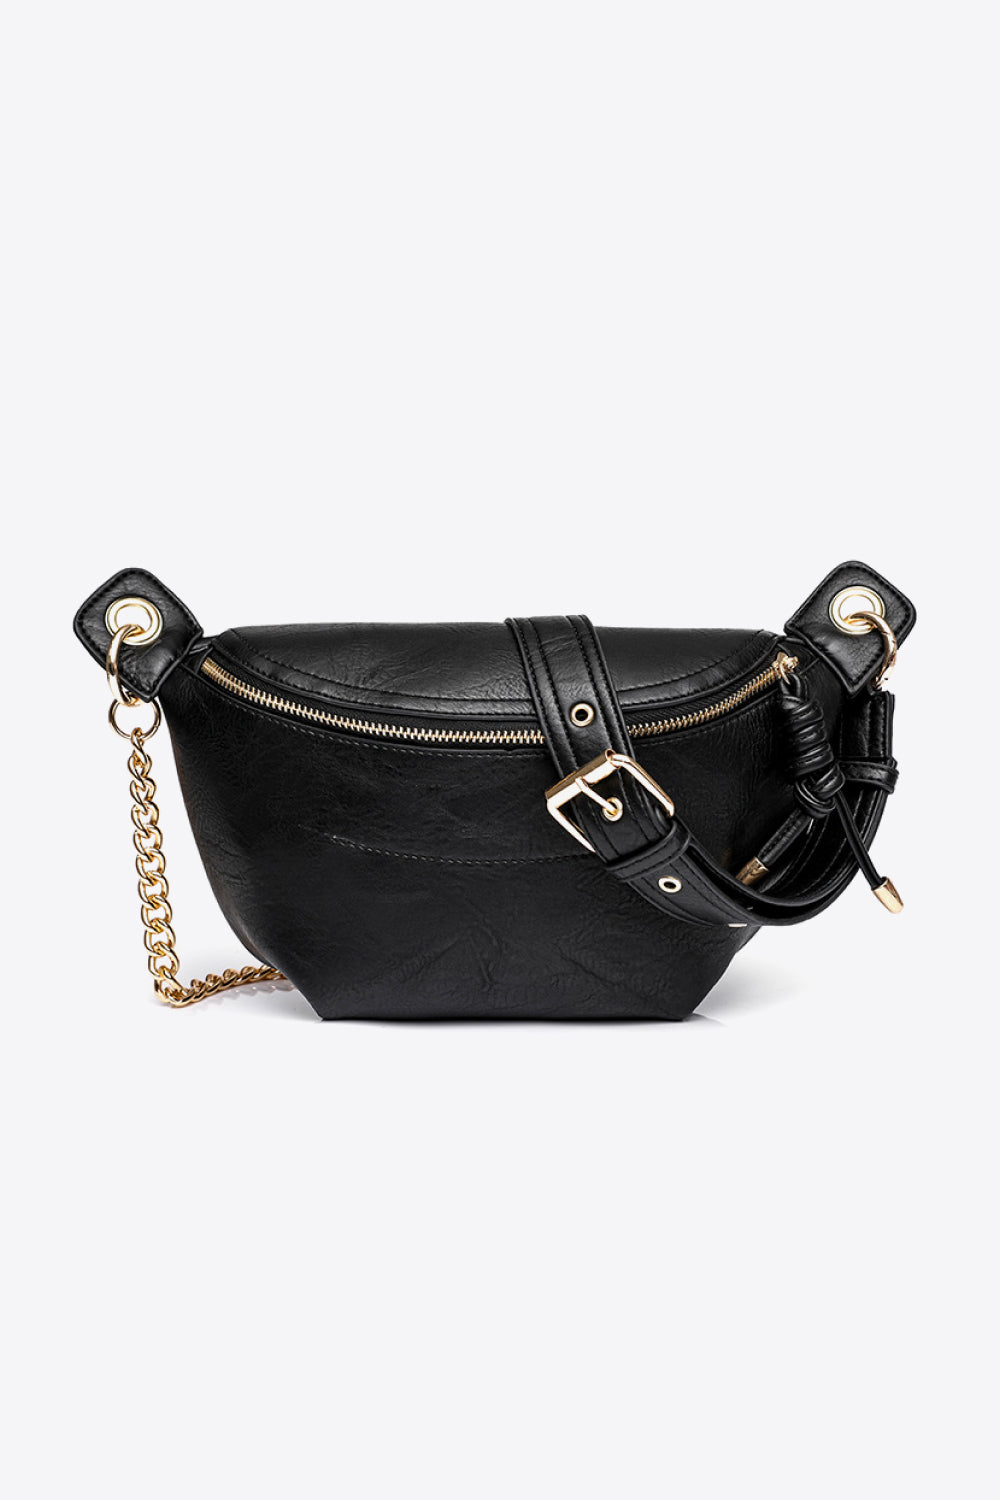 PU Leather Chain Strap Crossbody Bag - Handbag - FITGGINS